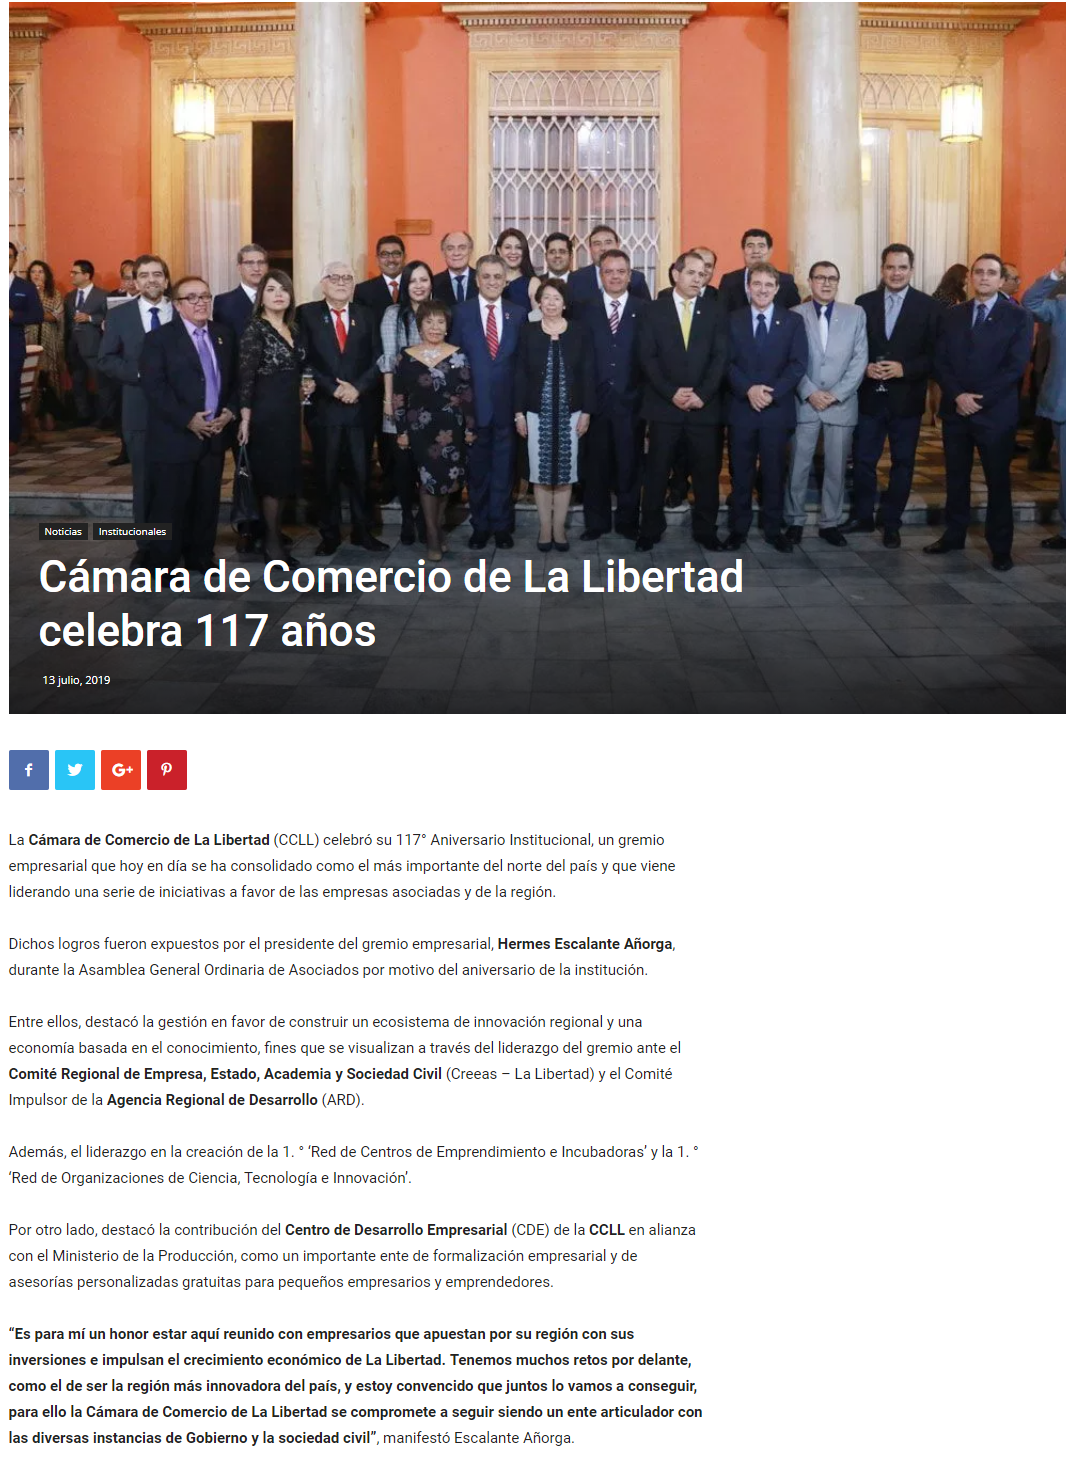 15.07.19.05 de Trujillo . com cámara de comercio de la libertad celebra 117 aniversario